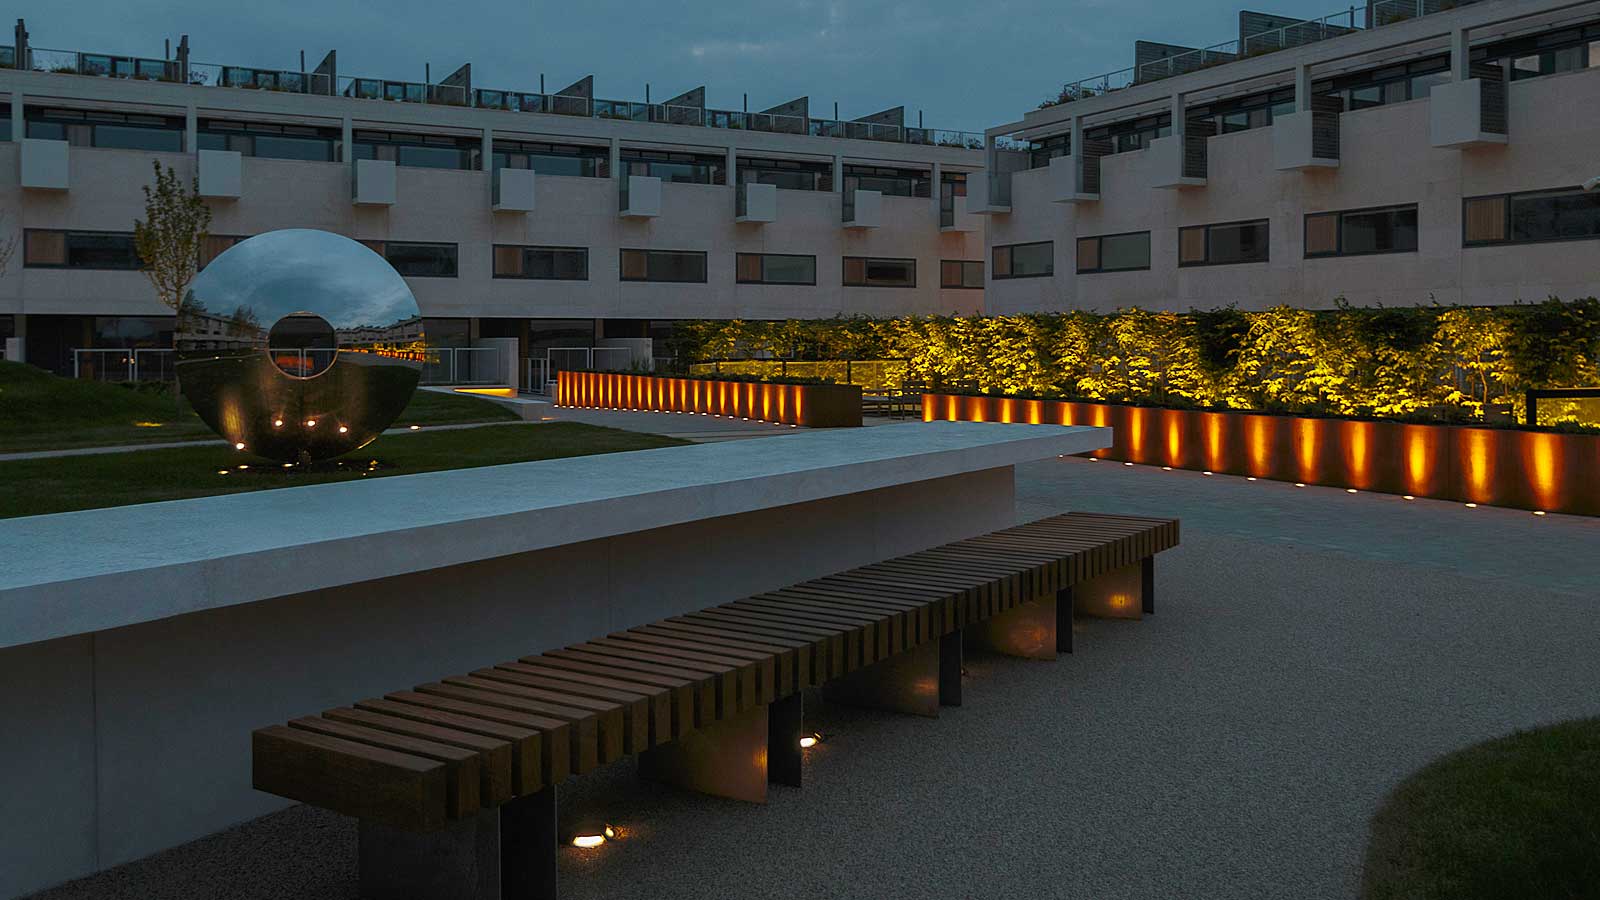 The scenographic garden lighting project of the prestigious Gabriel Square residential development